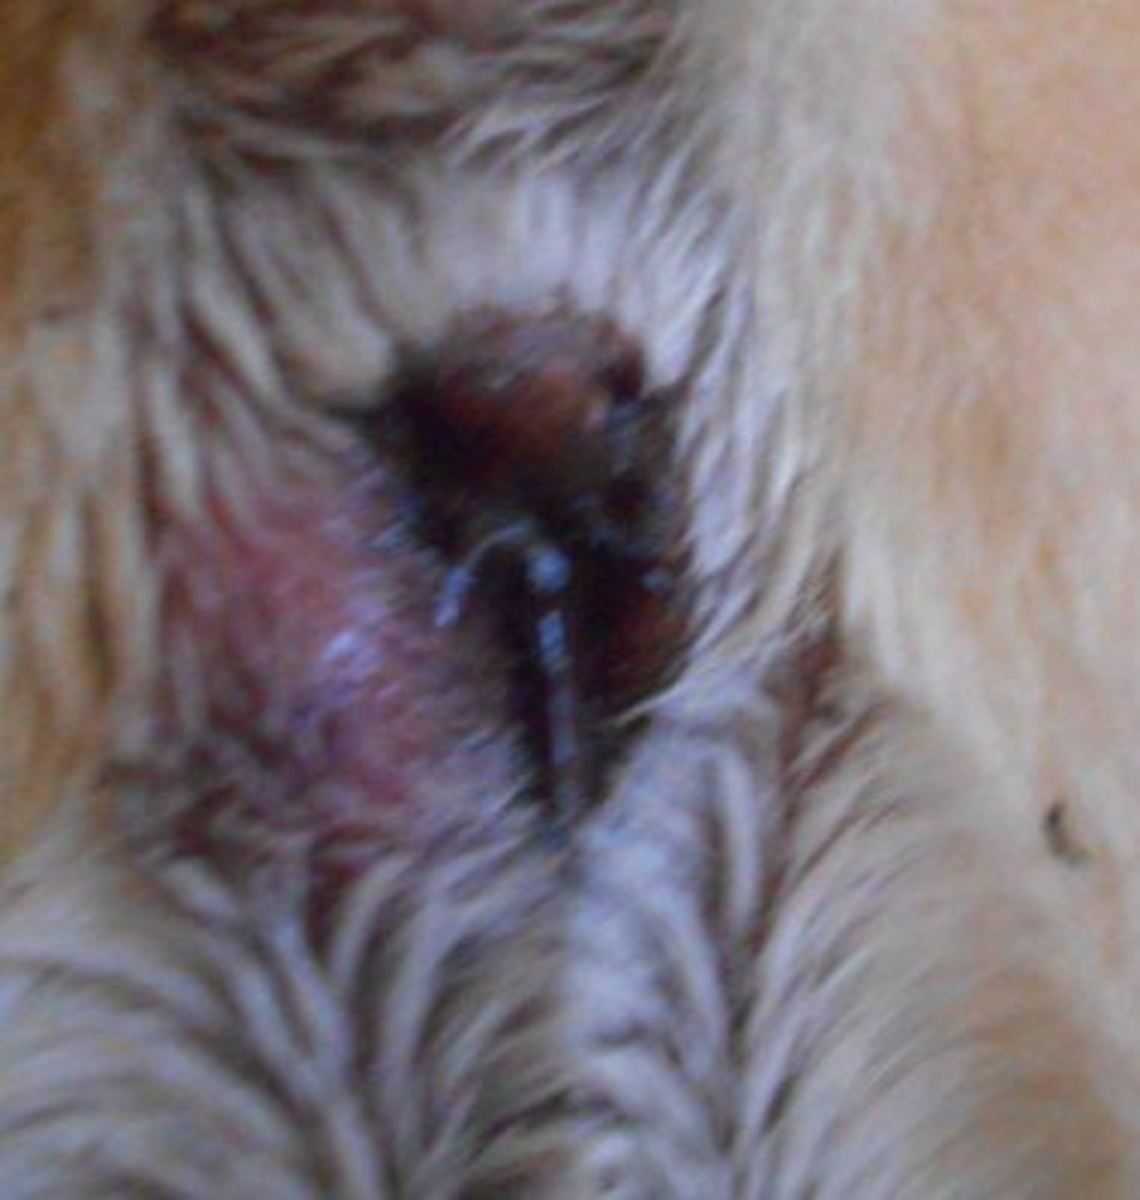 Dog with ruptured anal gland abscess